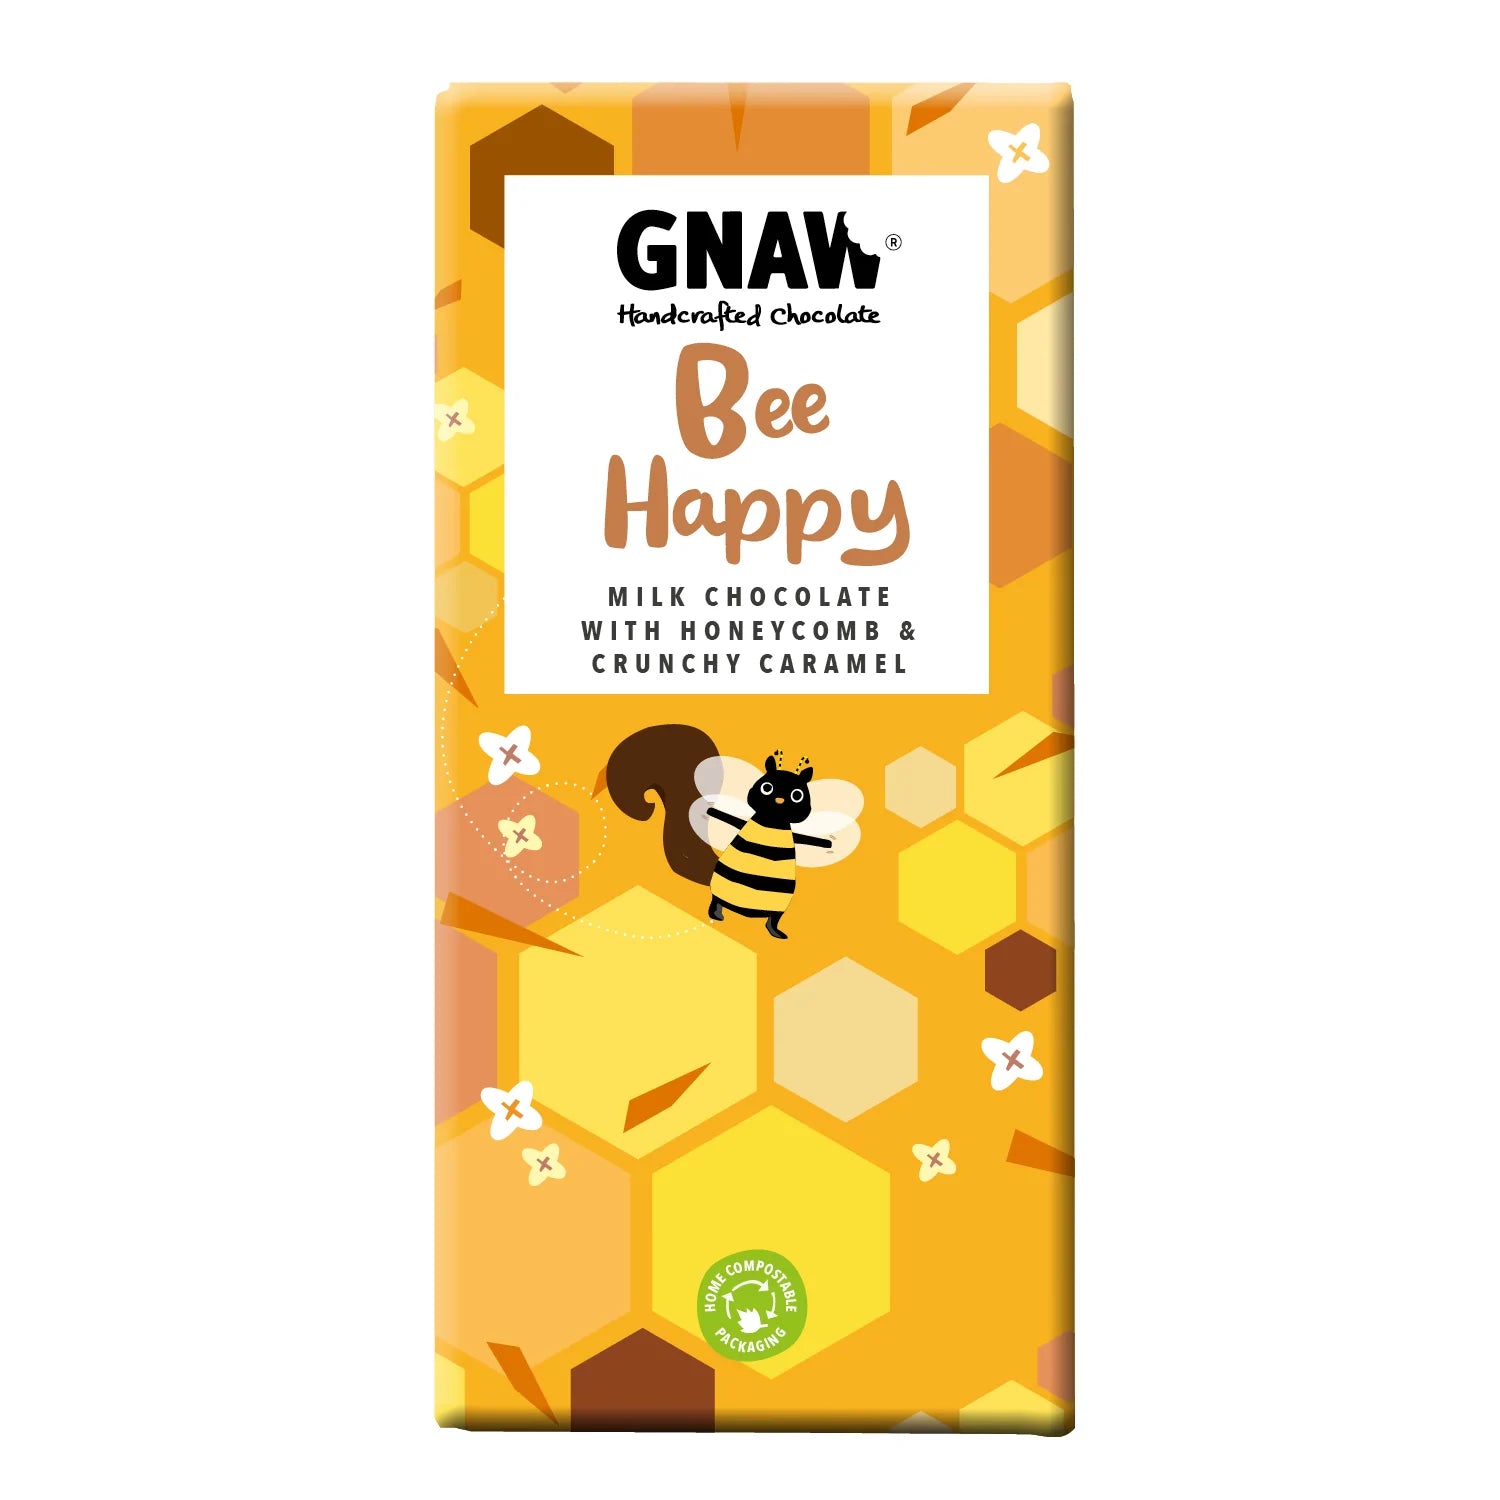 Gnaw Milk Chocolate Bar with Honeycomb & Crunchy Caramel